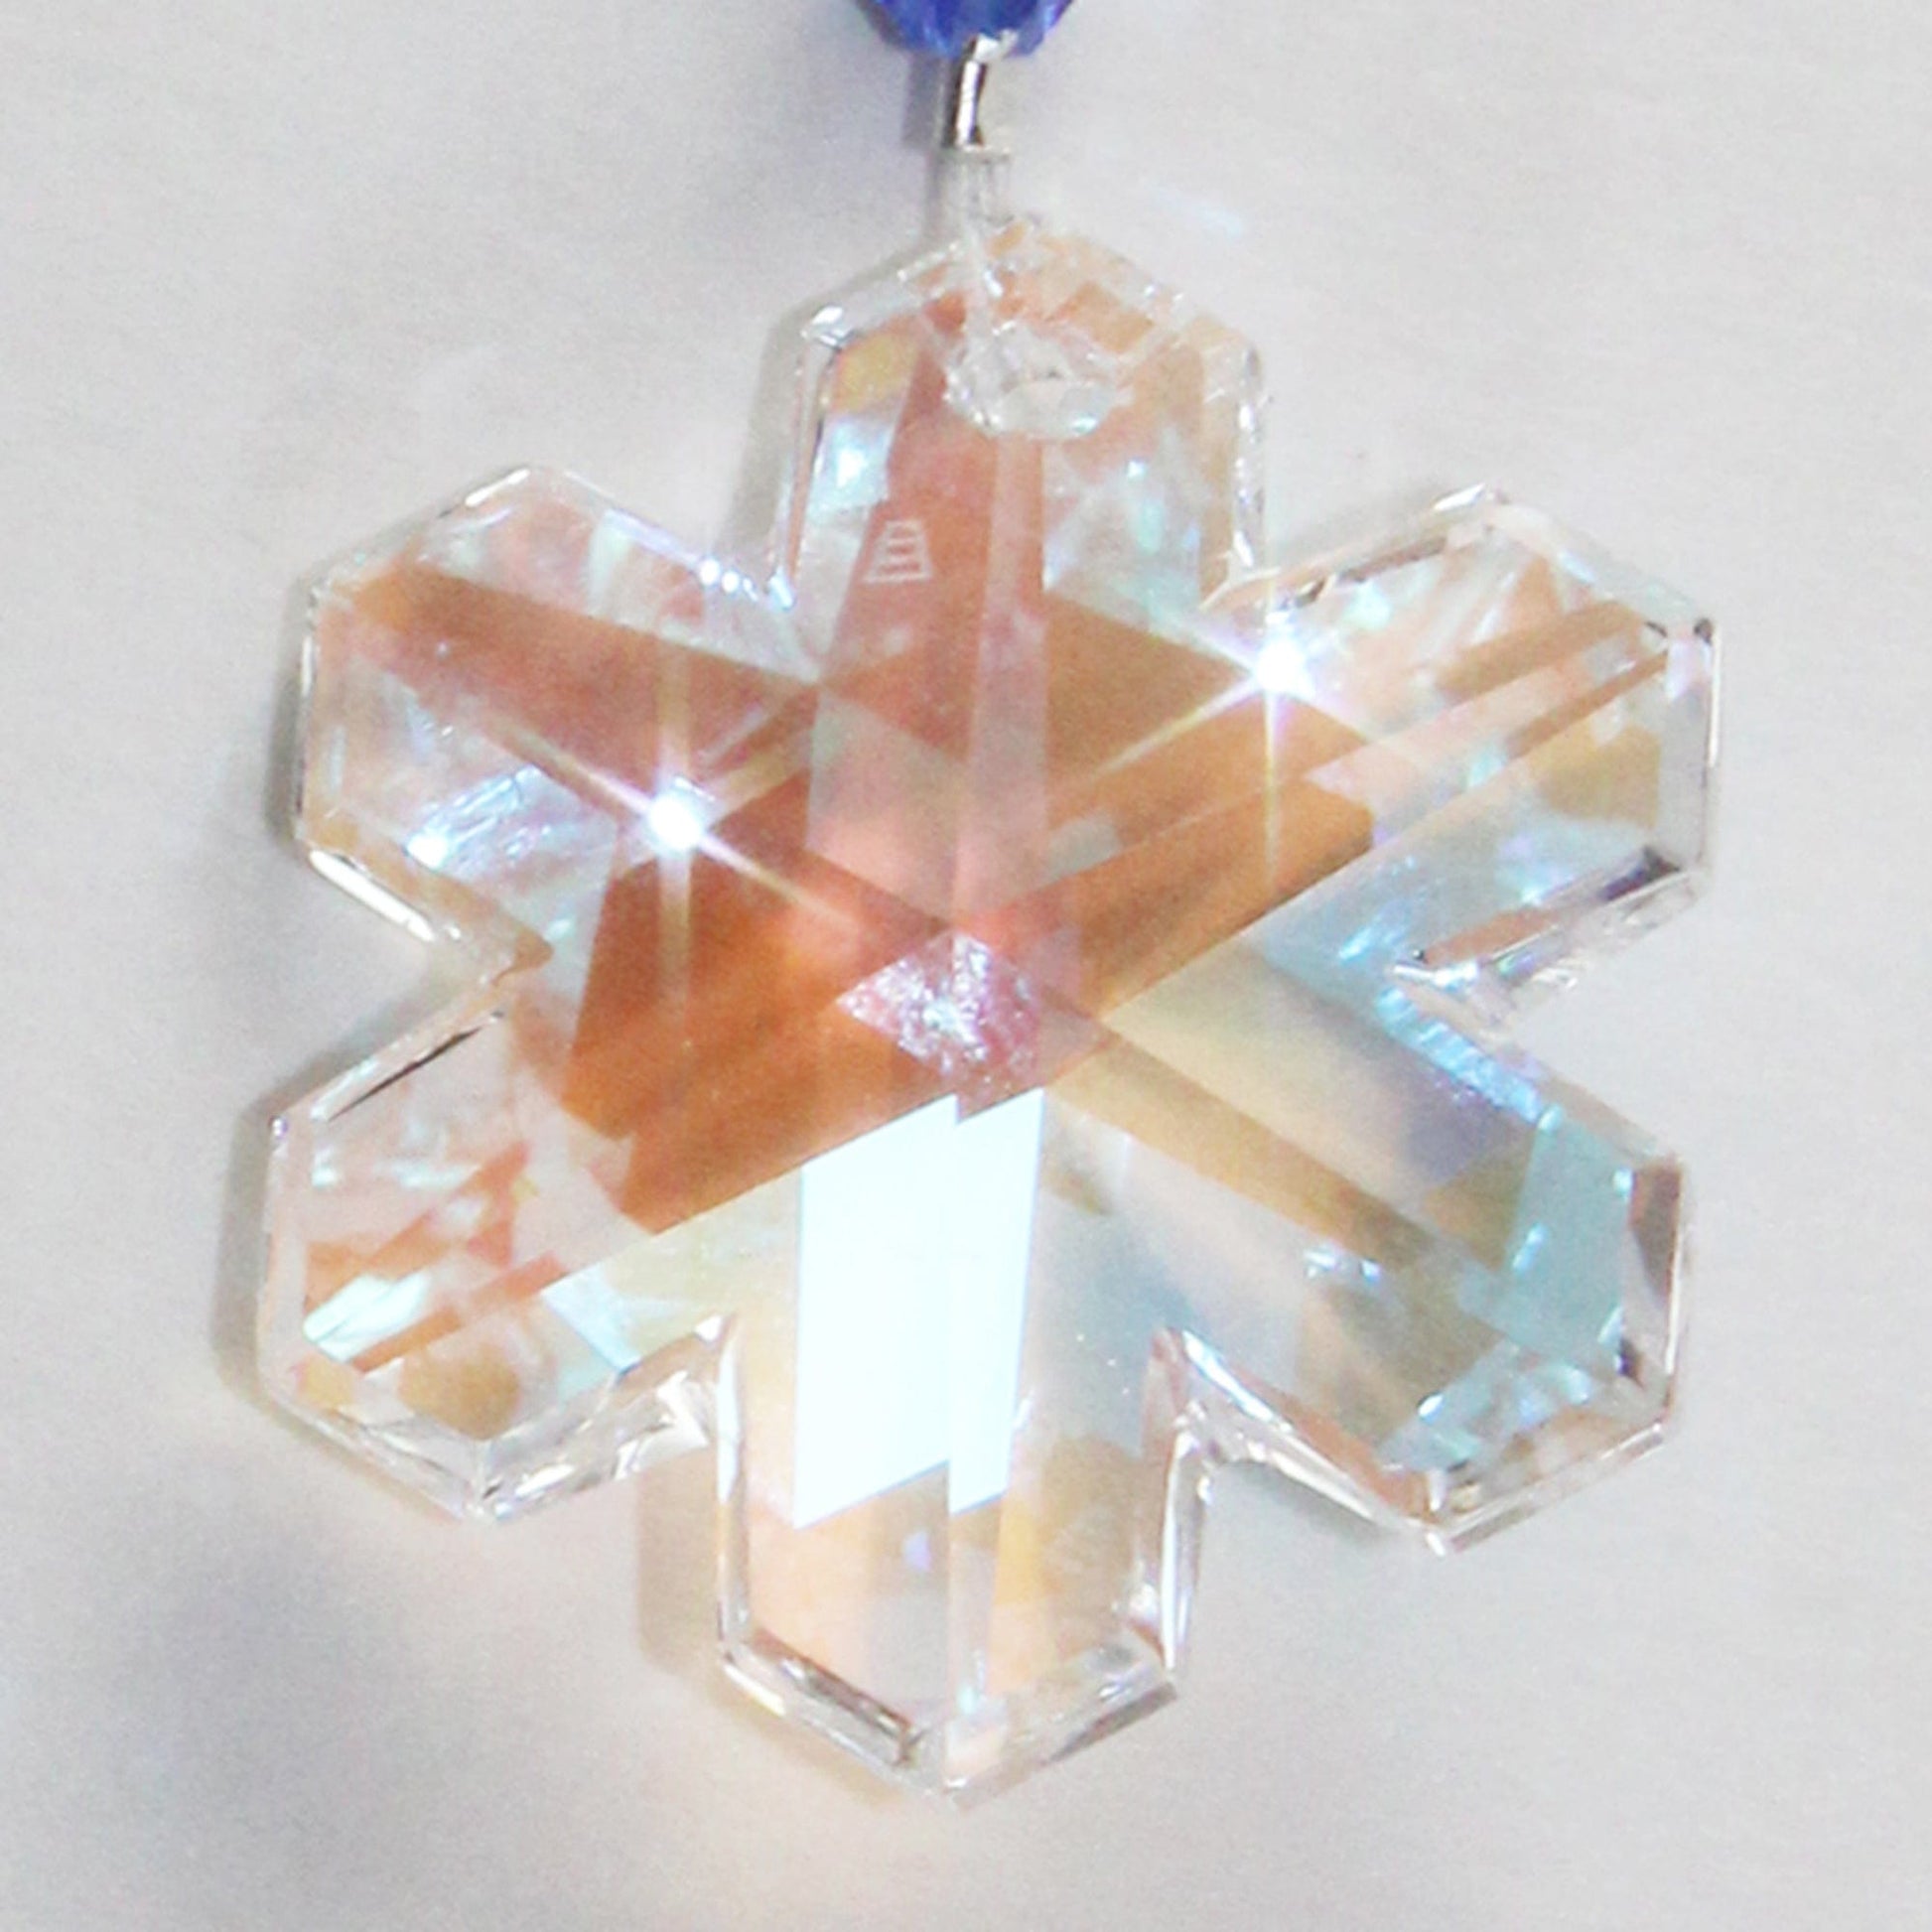 Snowflake Crystal Suncatcher Ornament & Pendulum, Rainbow Maker, Light Catcher, Hanging Crystals For Feng Shui Decor Winter Wonder